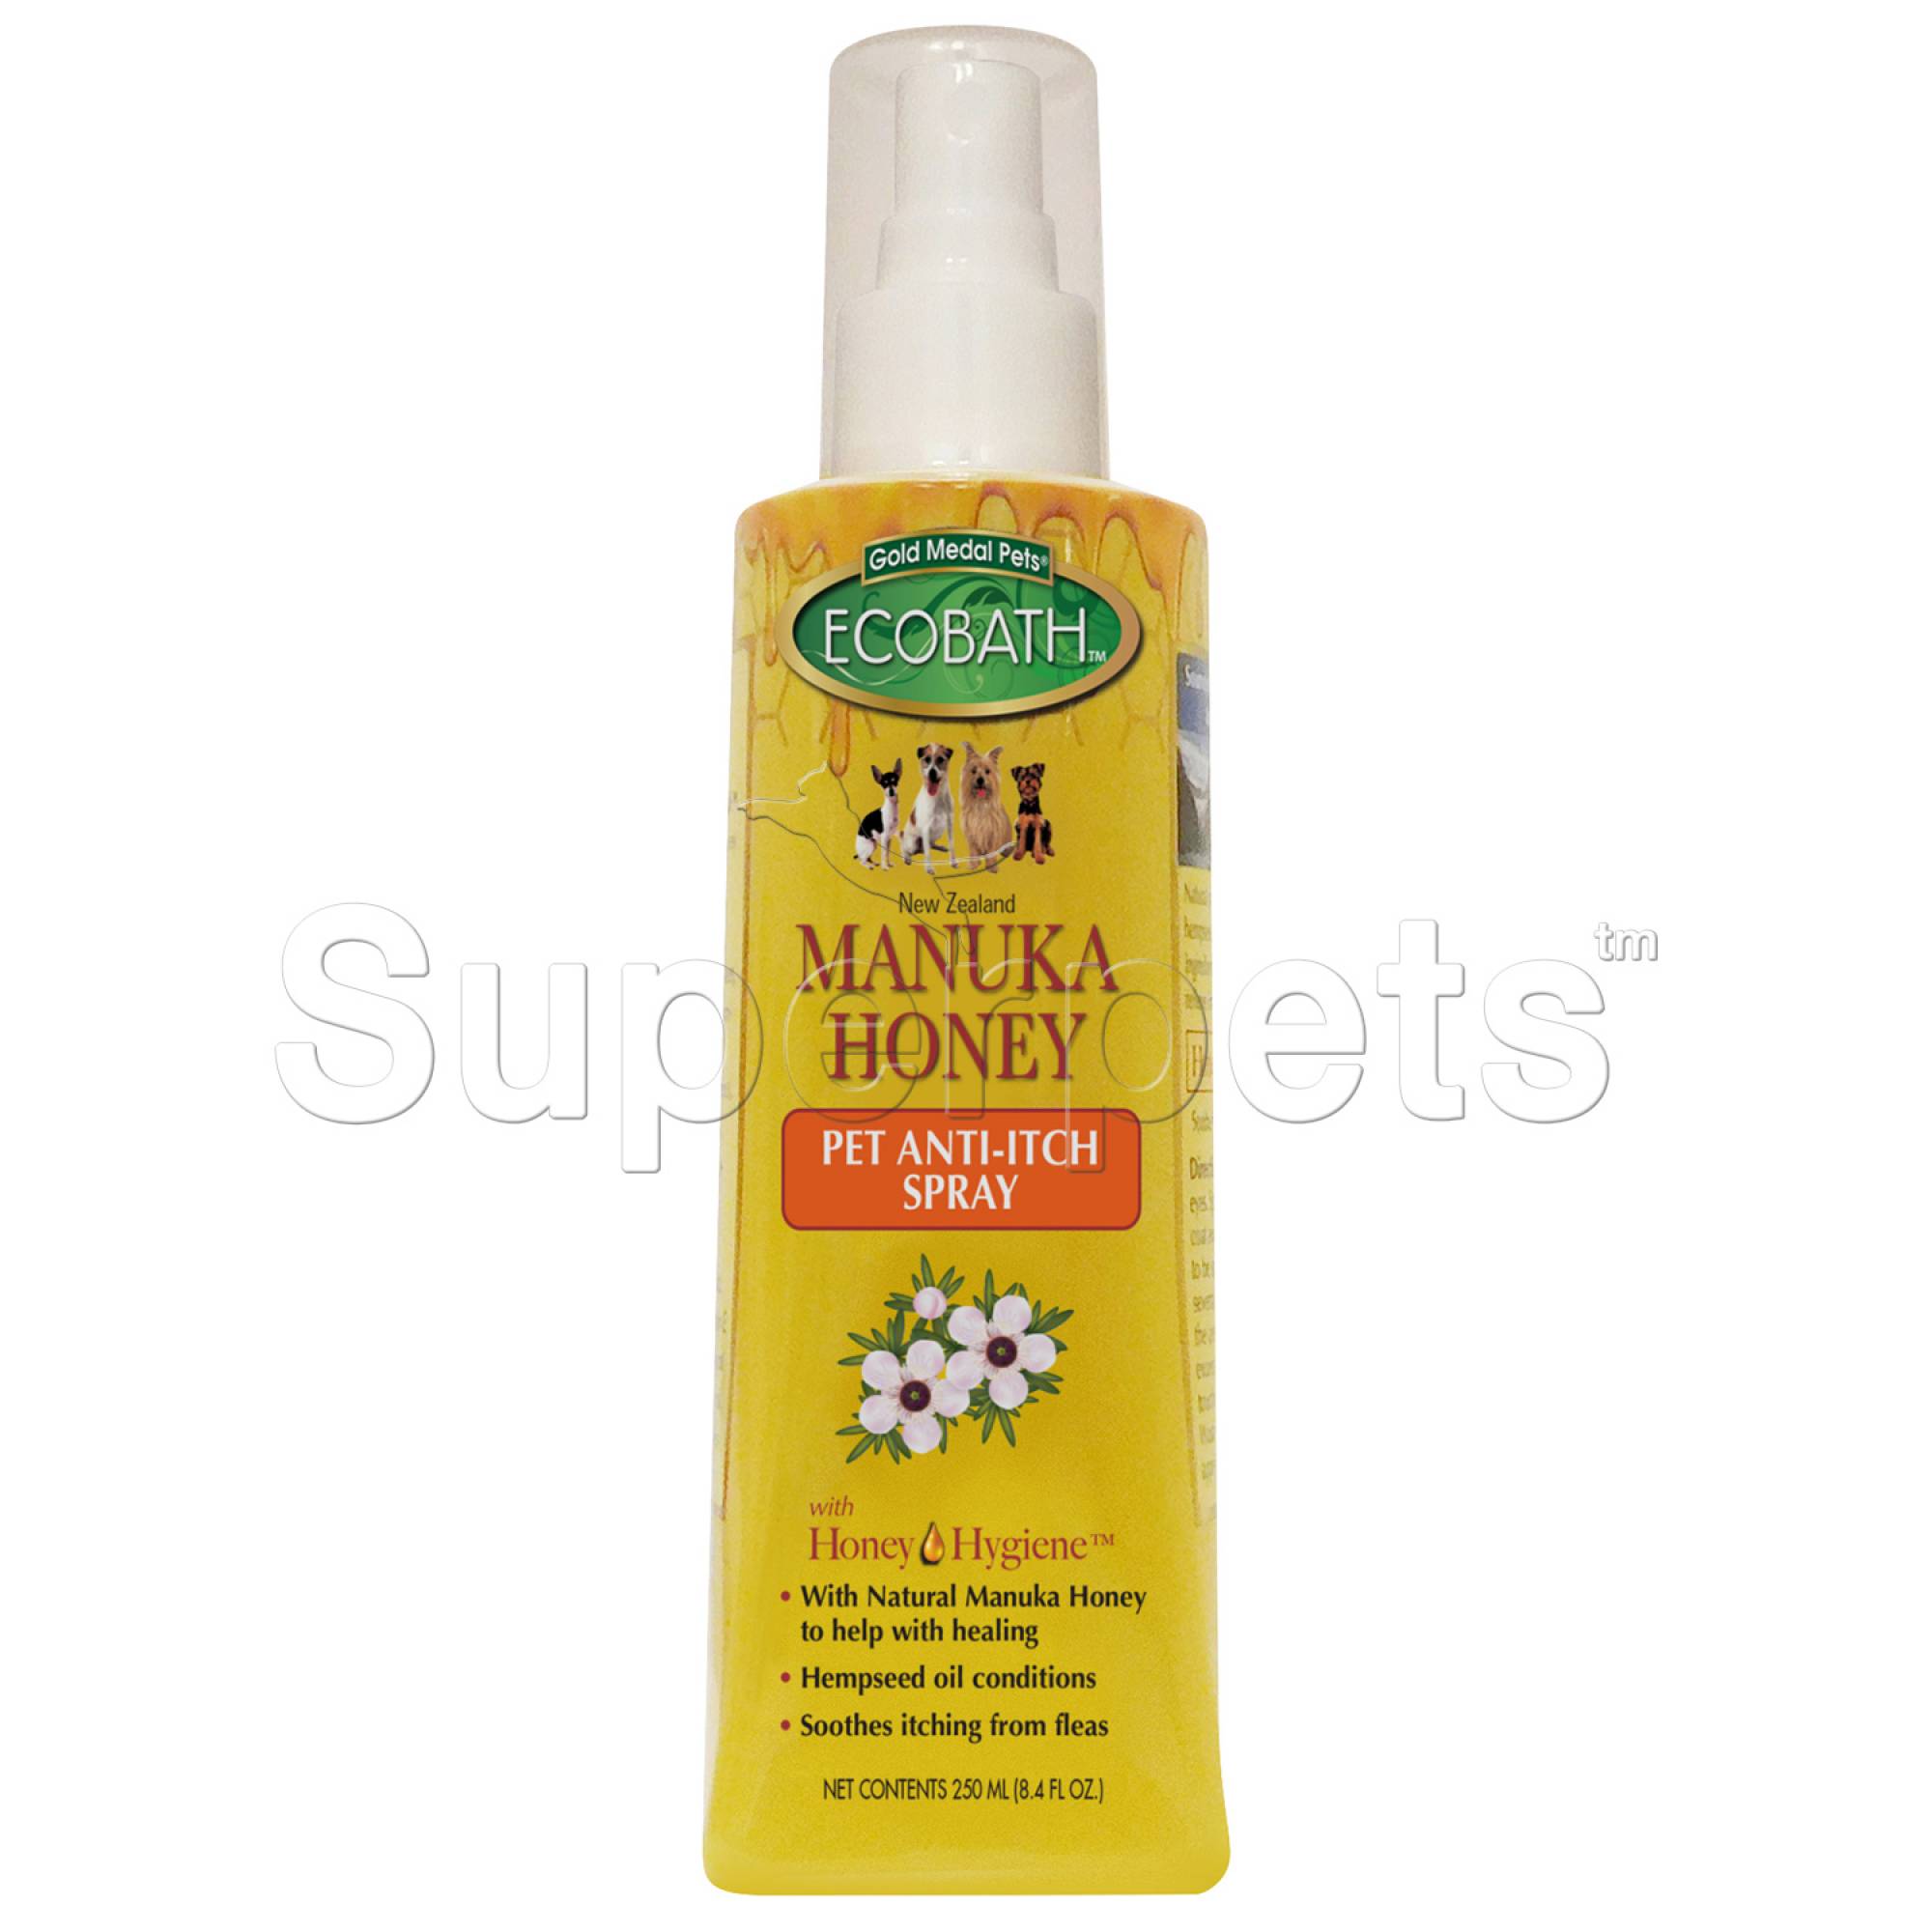 Gold Medal Pets - EcoBath Manuka Honey Pet Anti-Itch Spray 250ml (8.4oz)